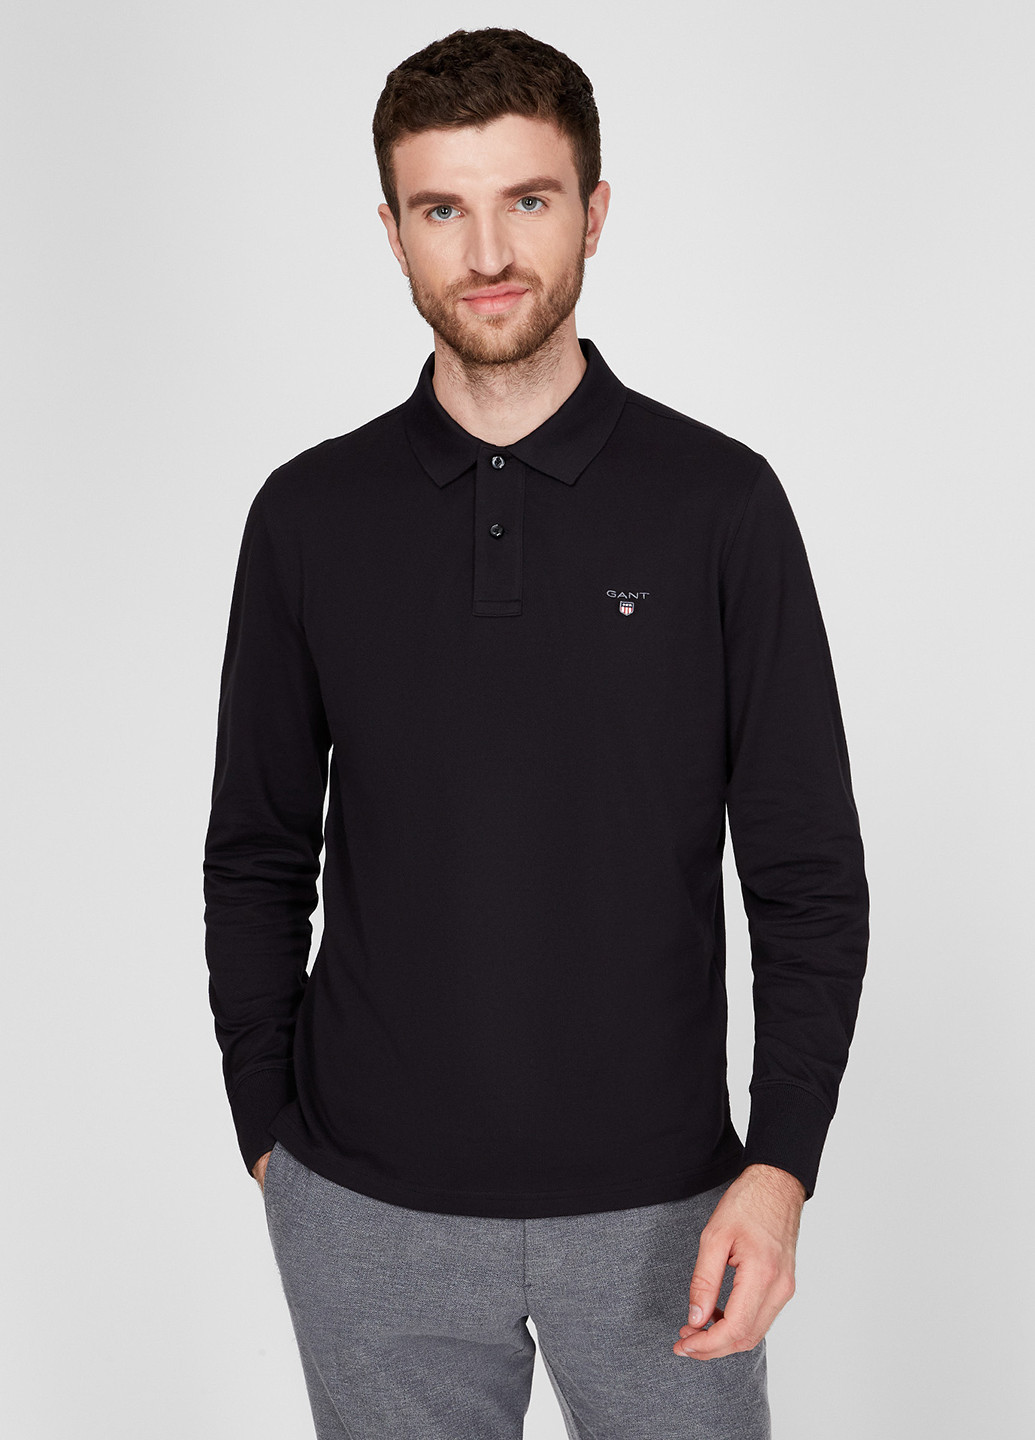 Черная футболка-поло для мужчин Gant с логотипом